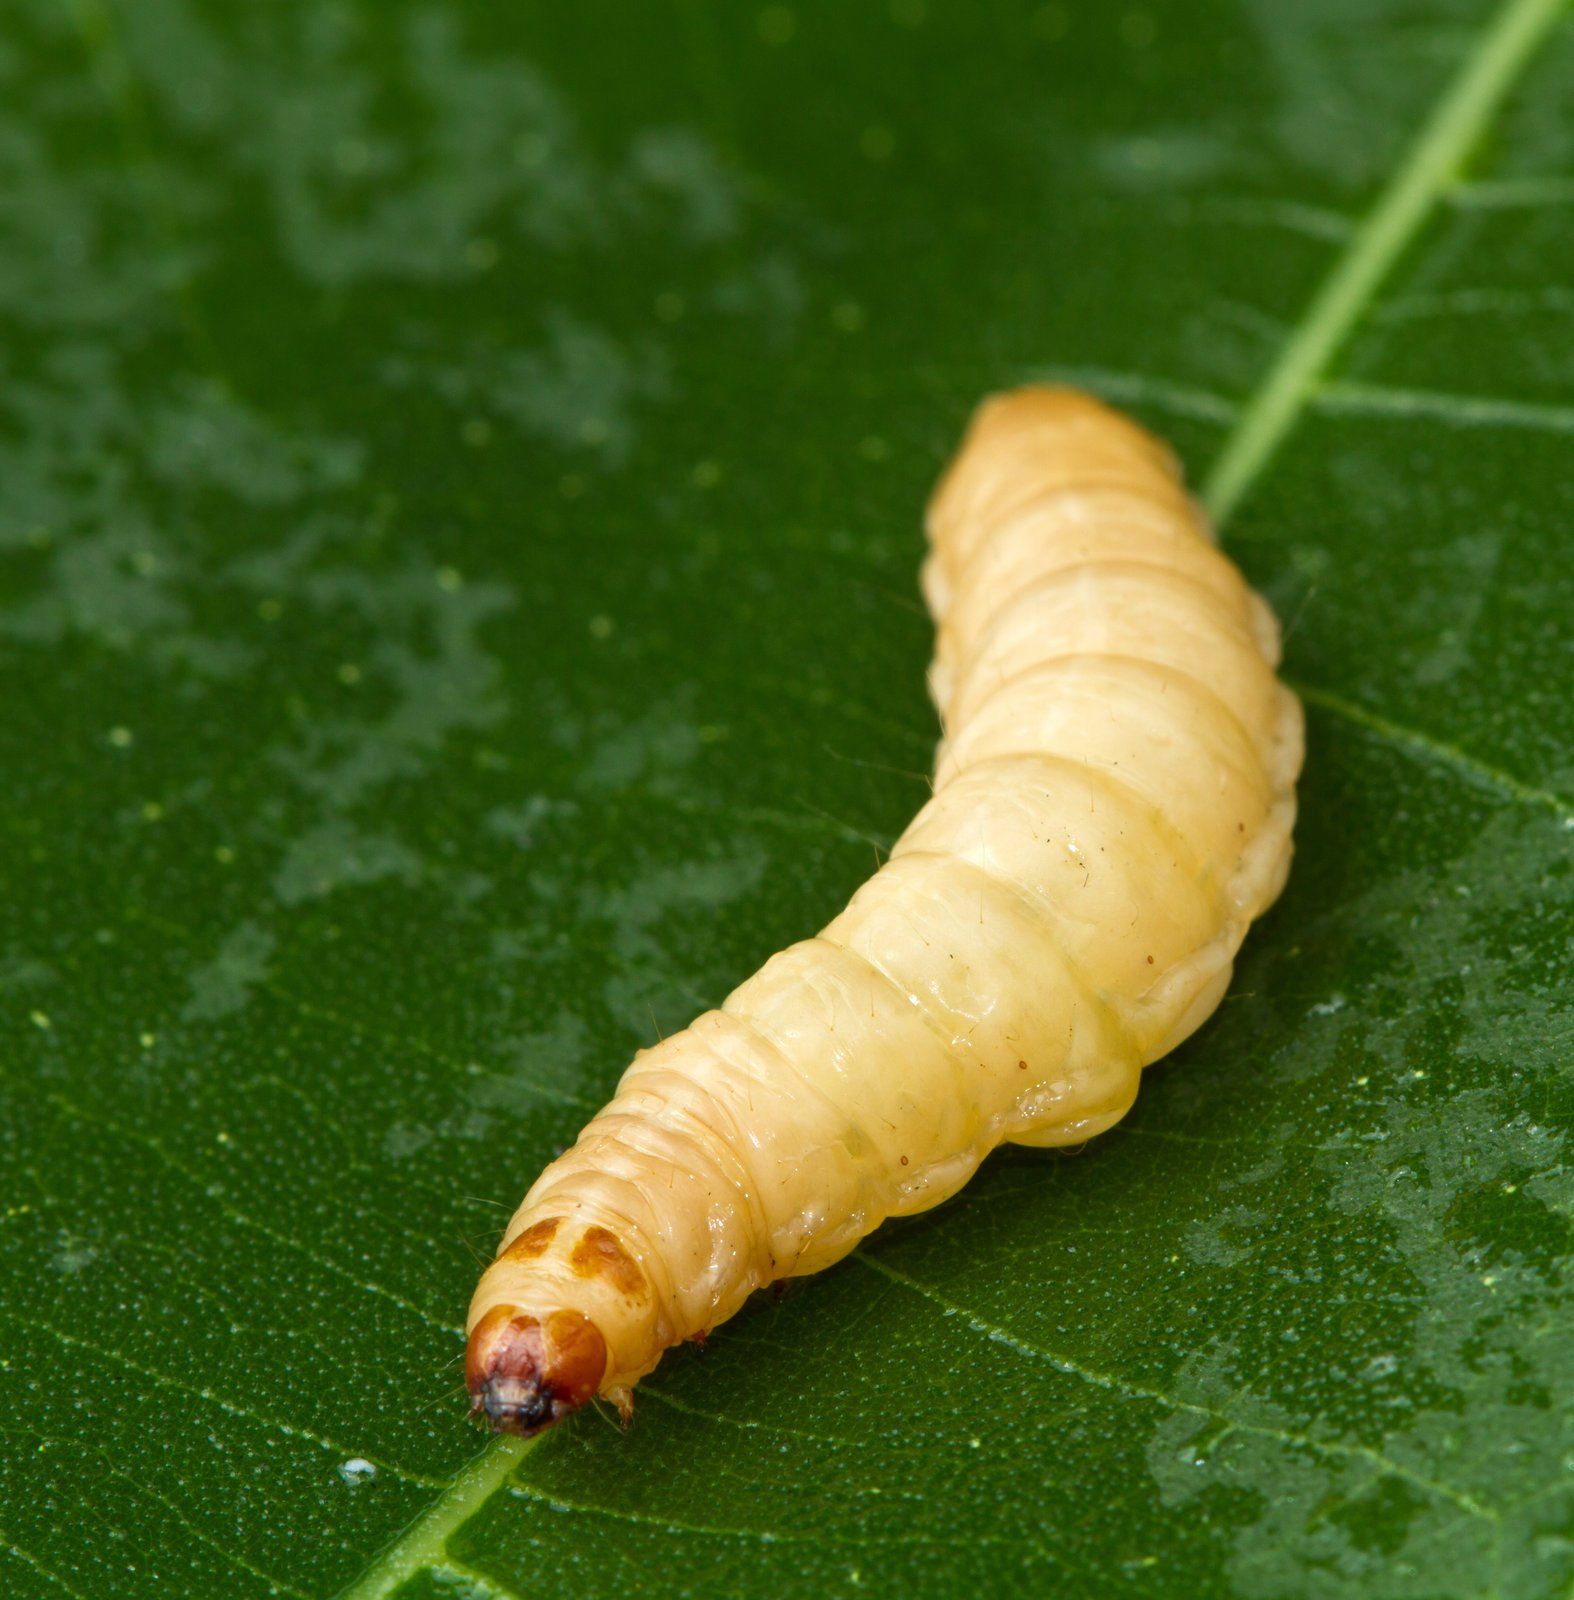 larvae in the leaves